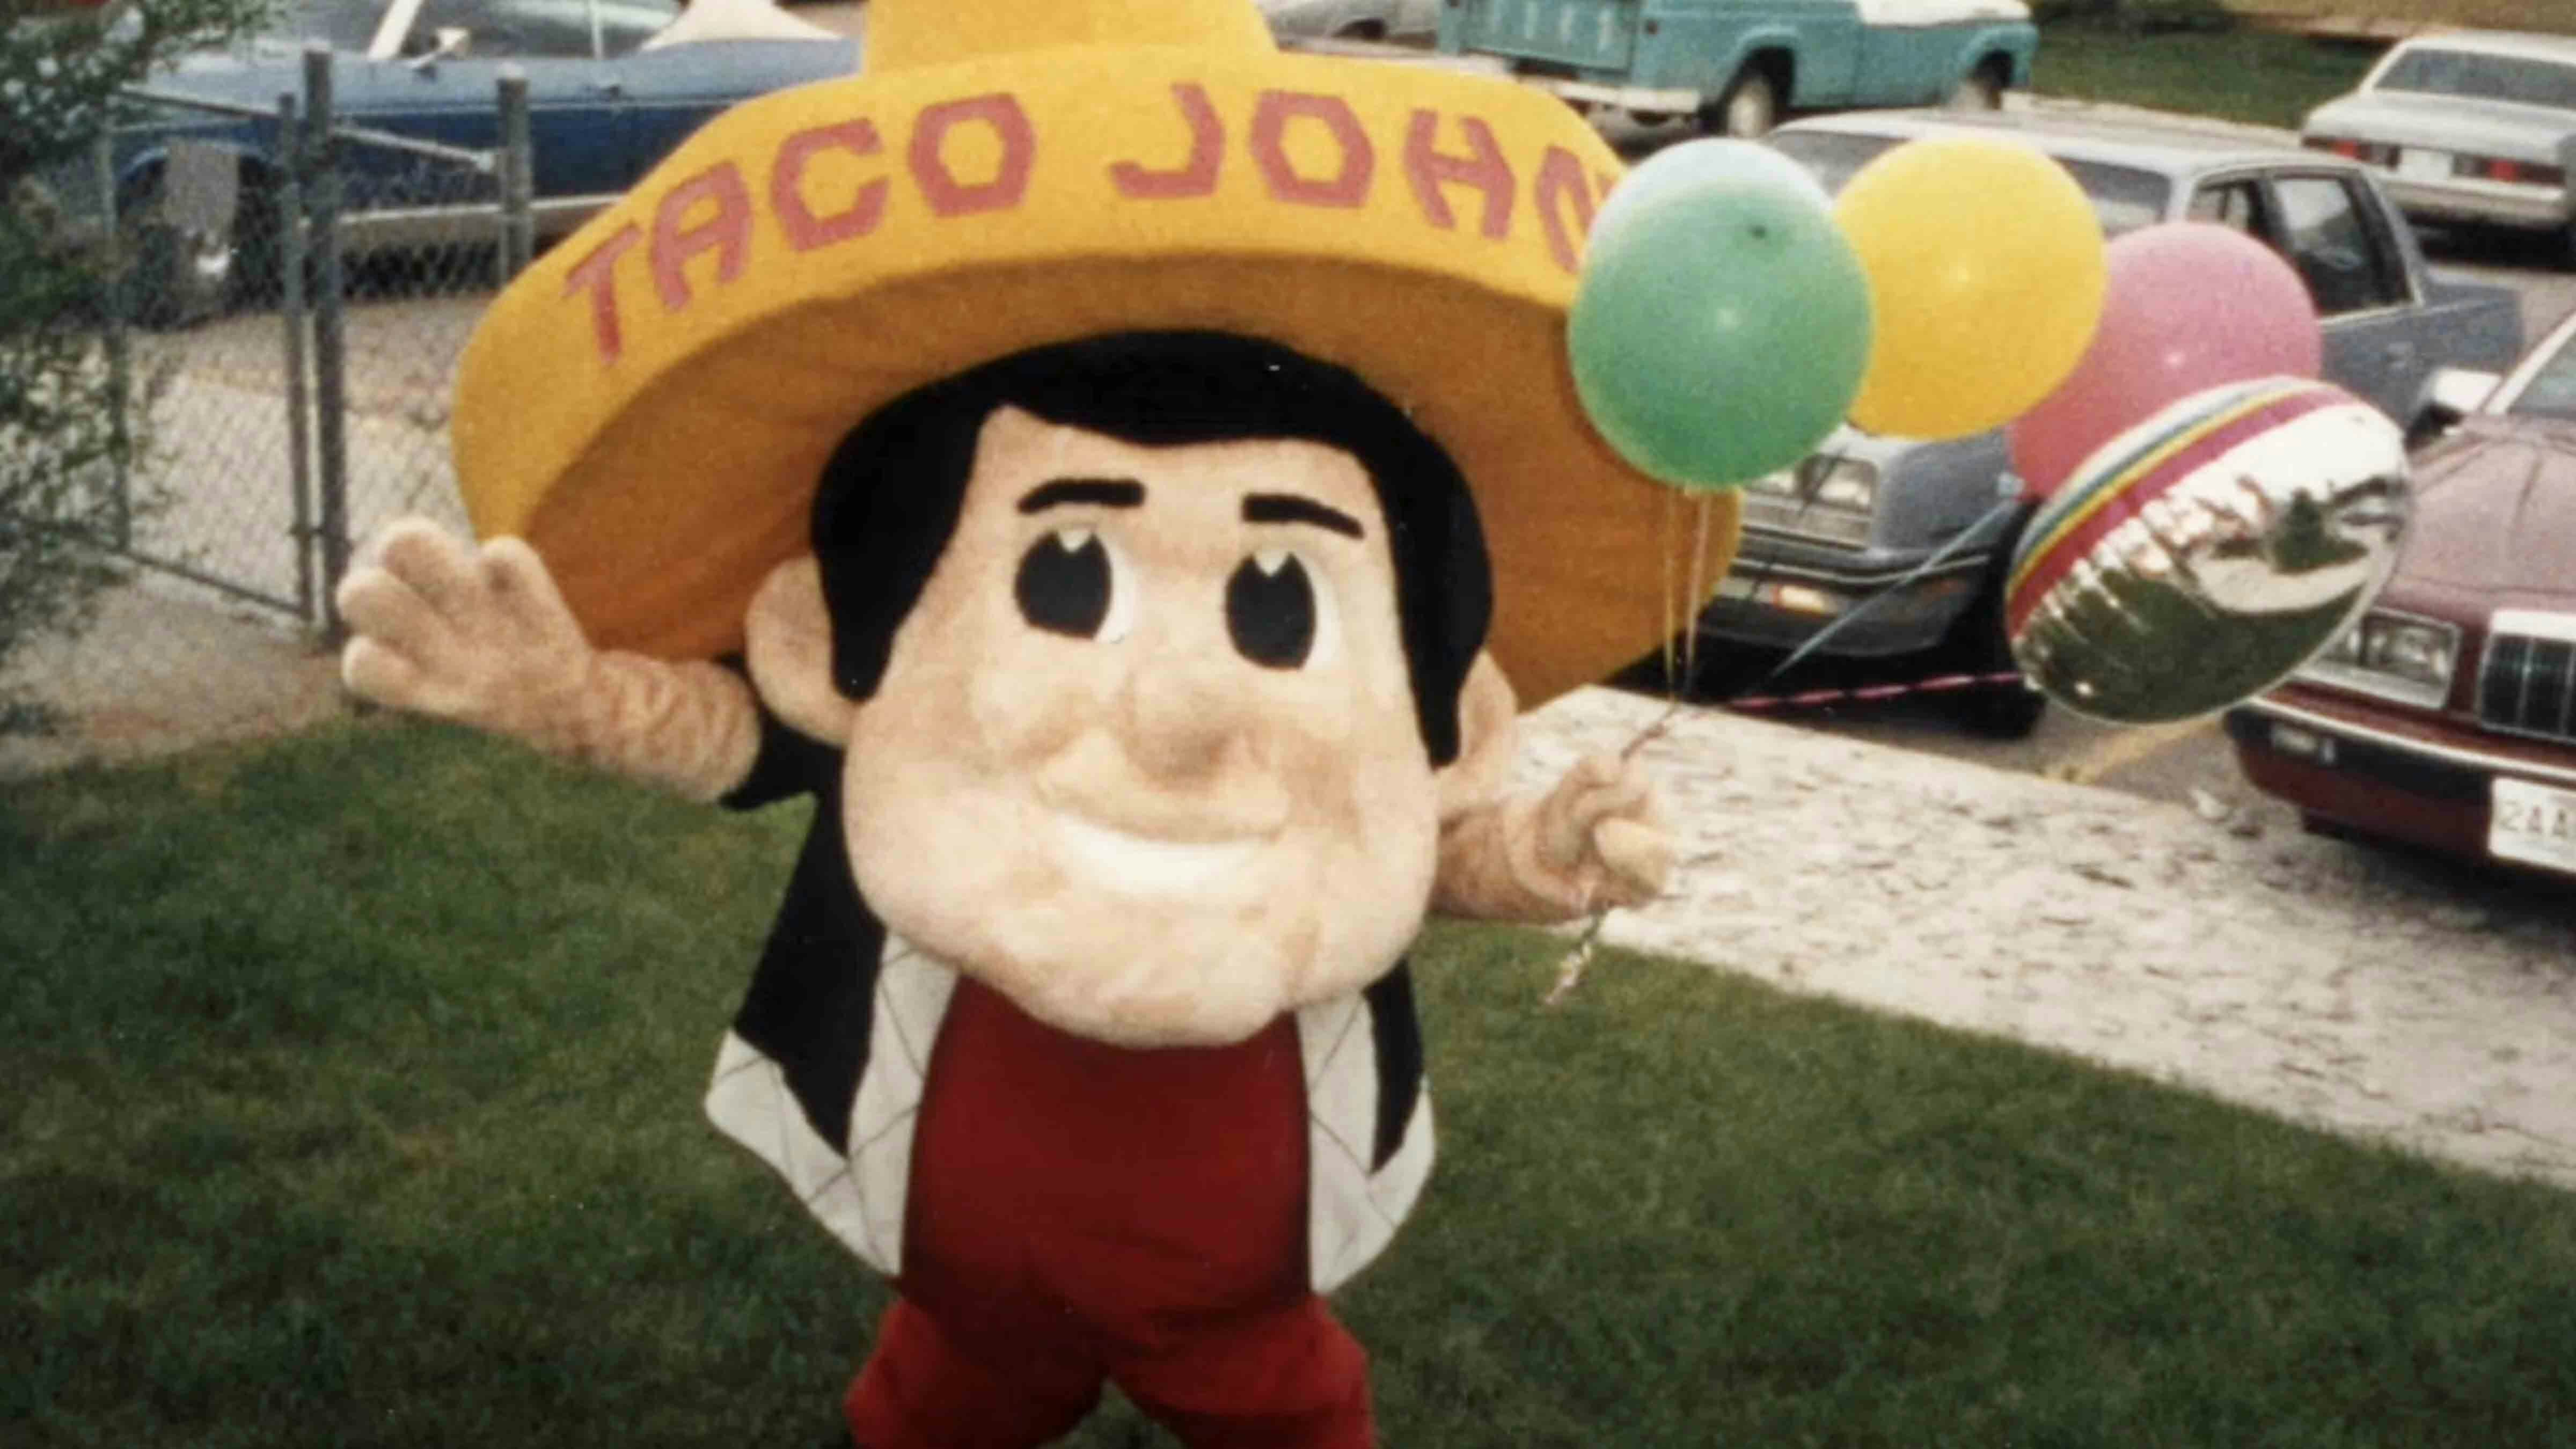 Taco John's original mascot